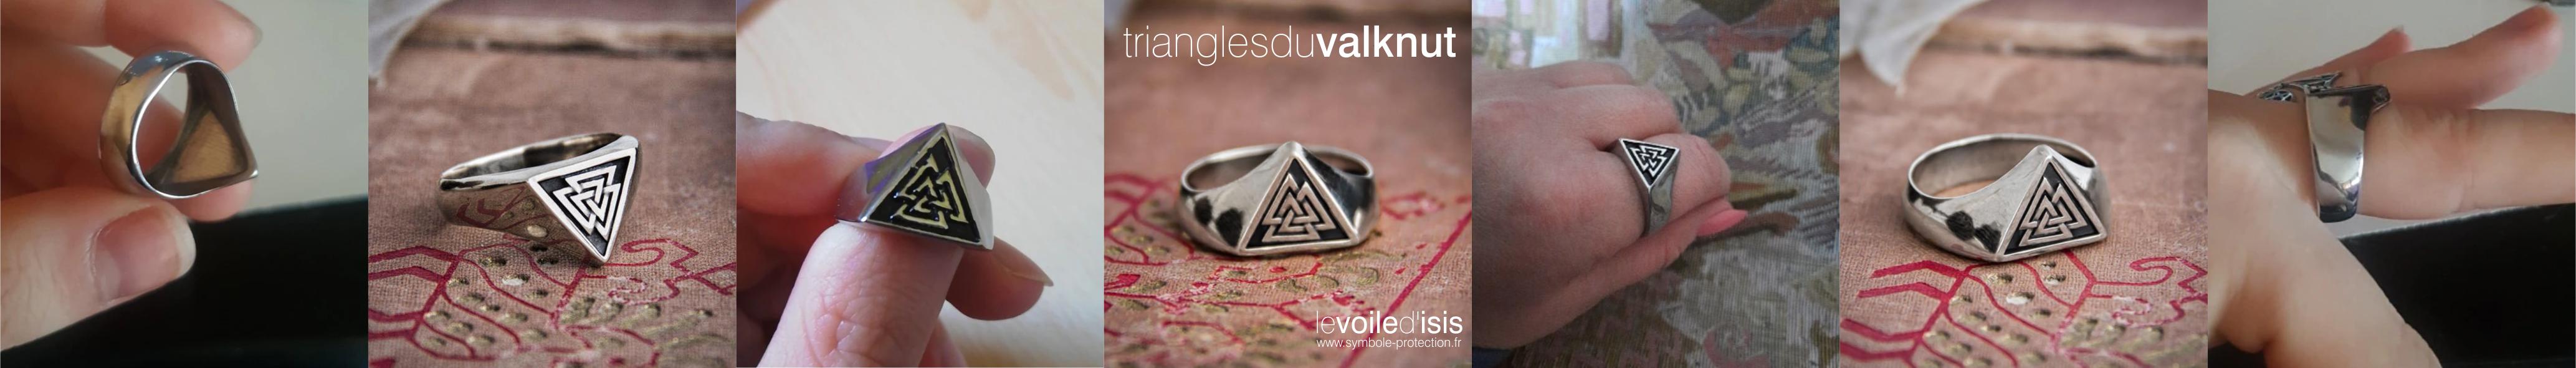 bagues chevalières vikings triangles du Valknut